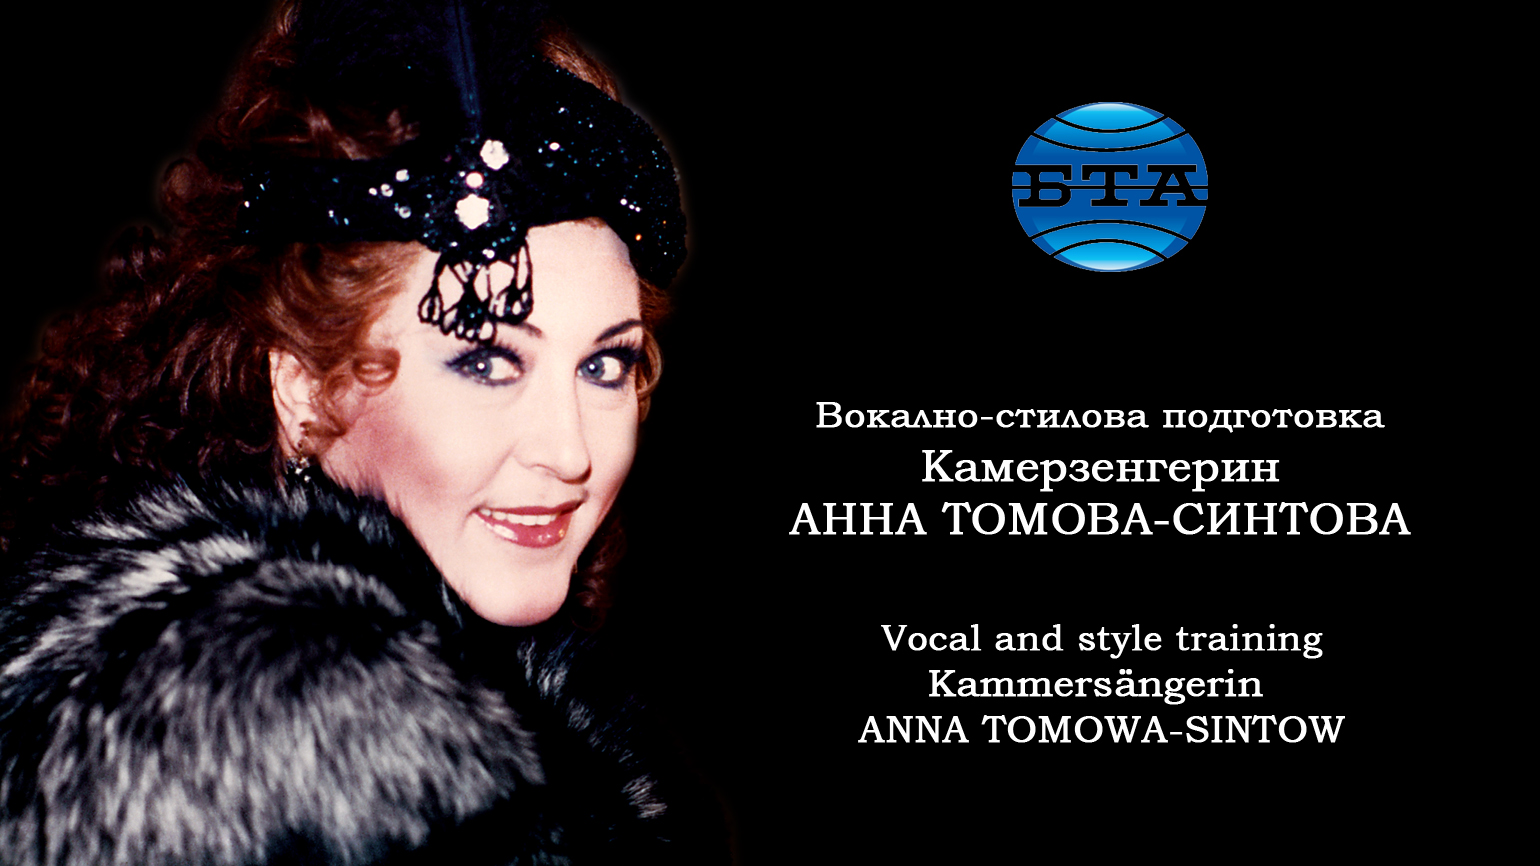 The Sofia Opera dedicates its latest premiere to Anna Tomowa-Sintow